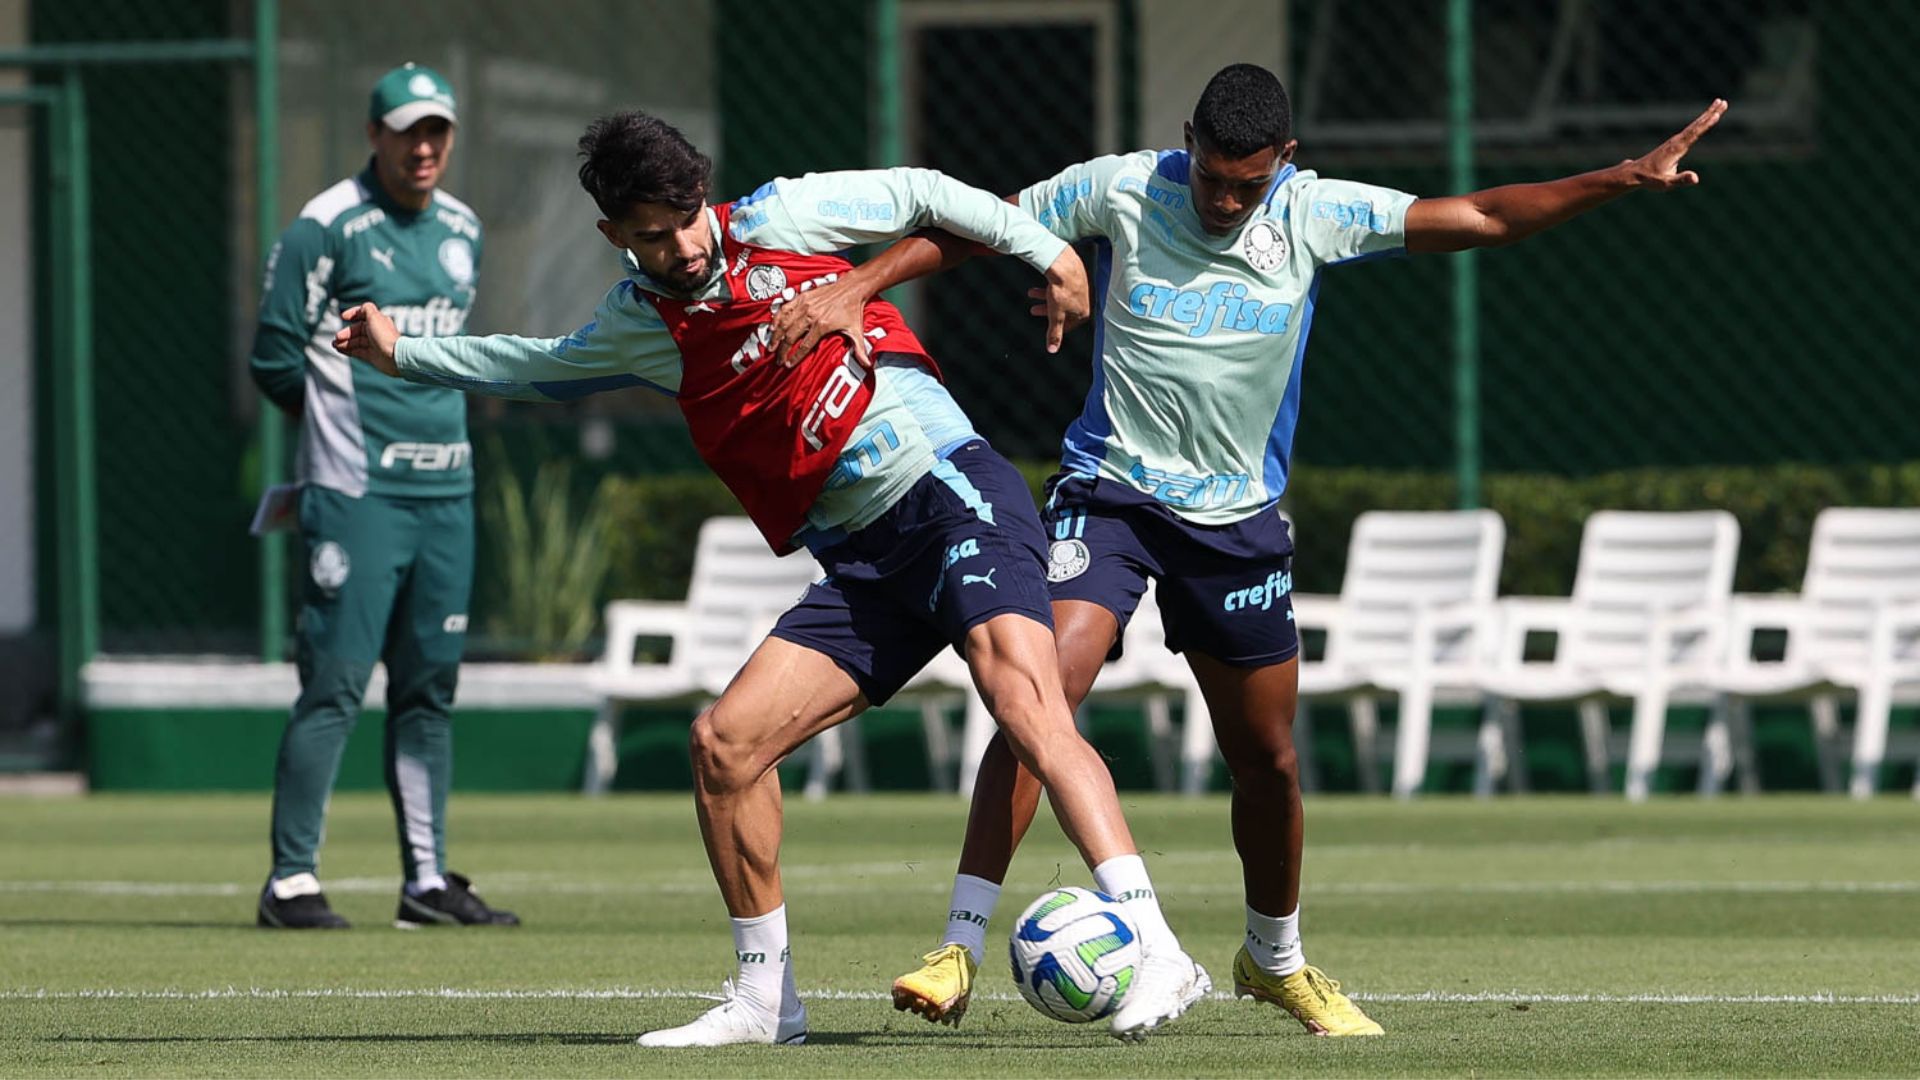 Imagens do treino do Palmeiras desta segunda-feira, 15 (Crédito: Cesar Greco / Palmeiras)